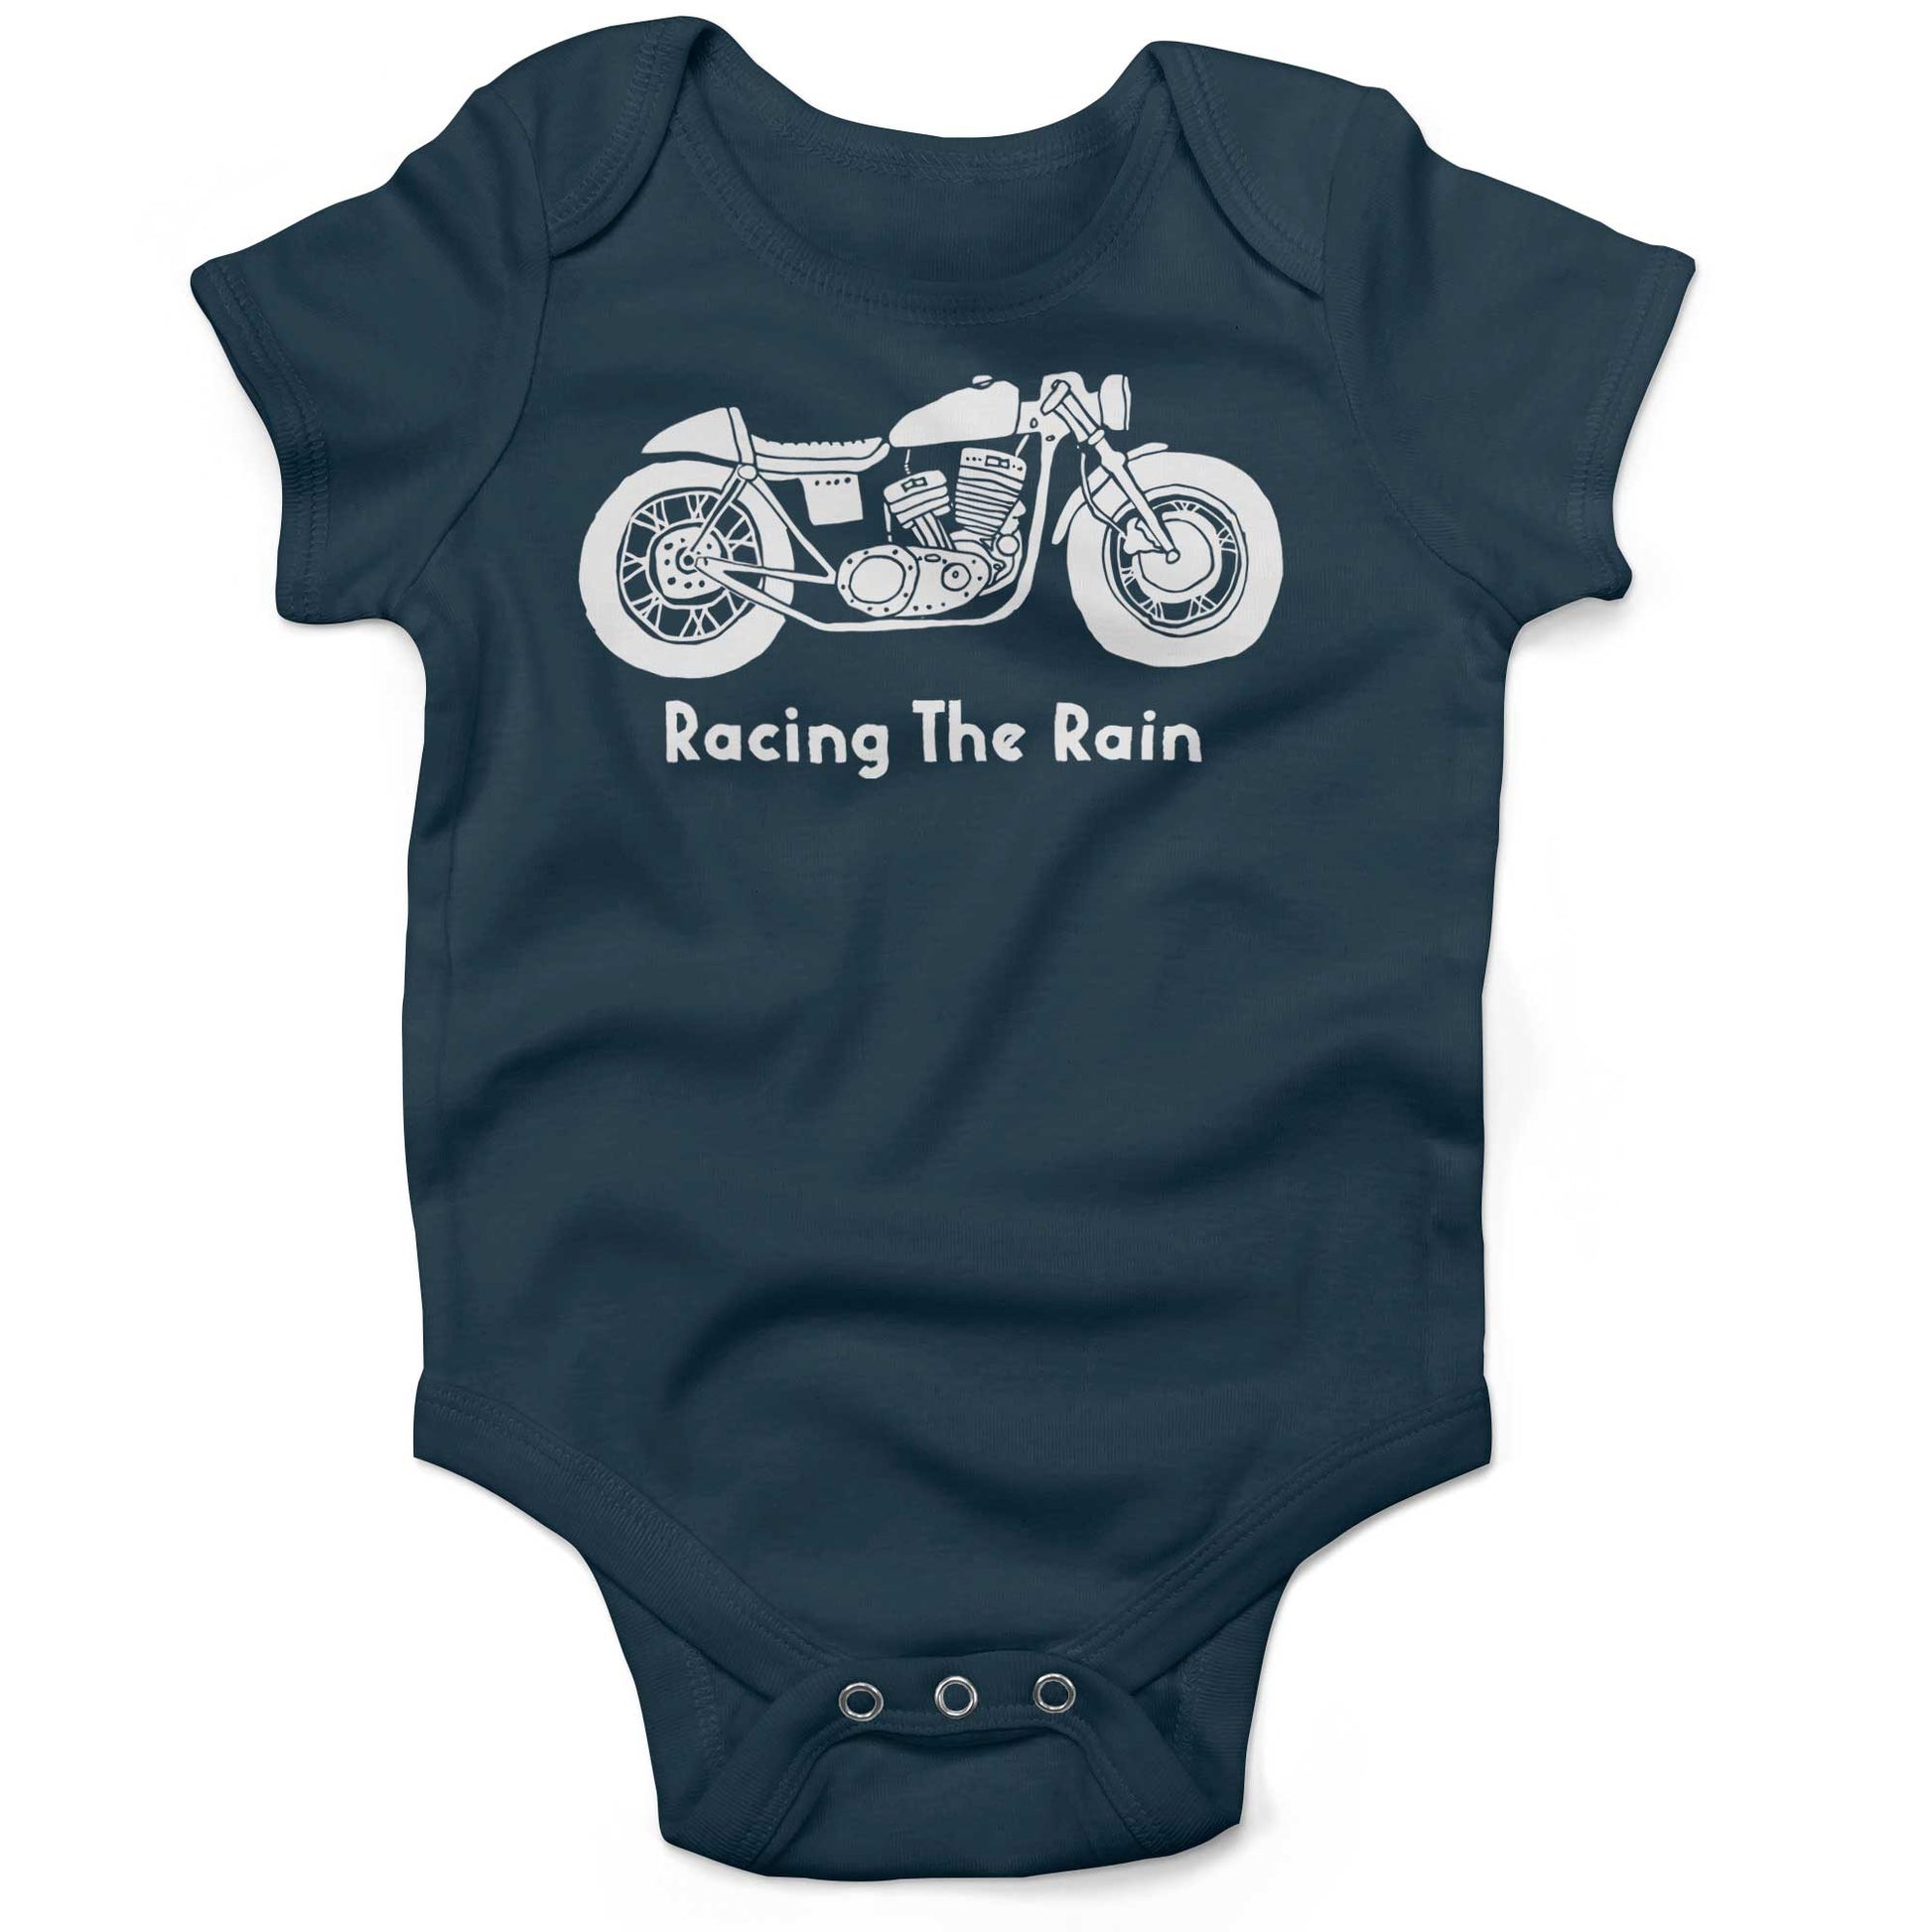 Racing The Rain Infant Bodysuit-Organic Pacific Blue-3-6 months